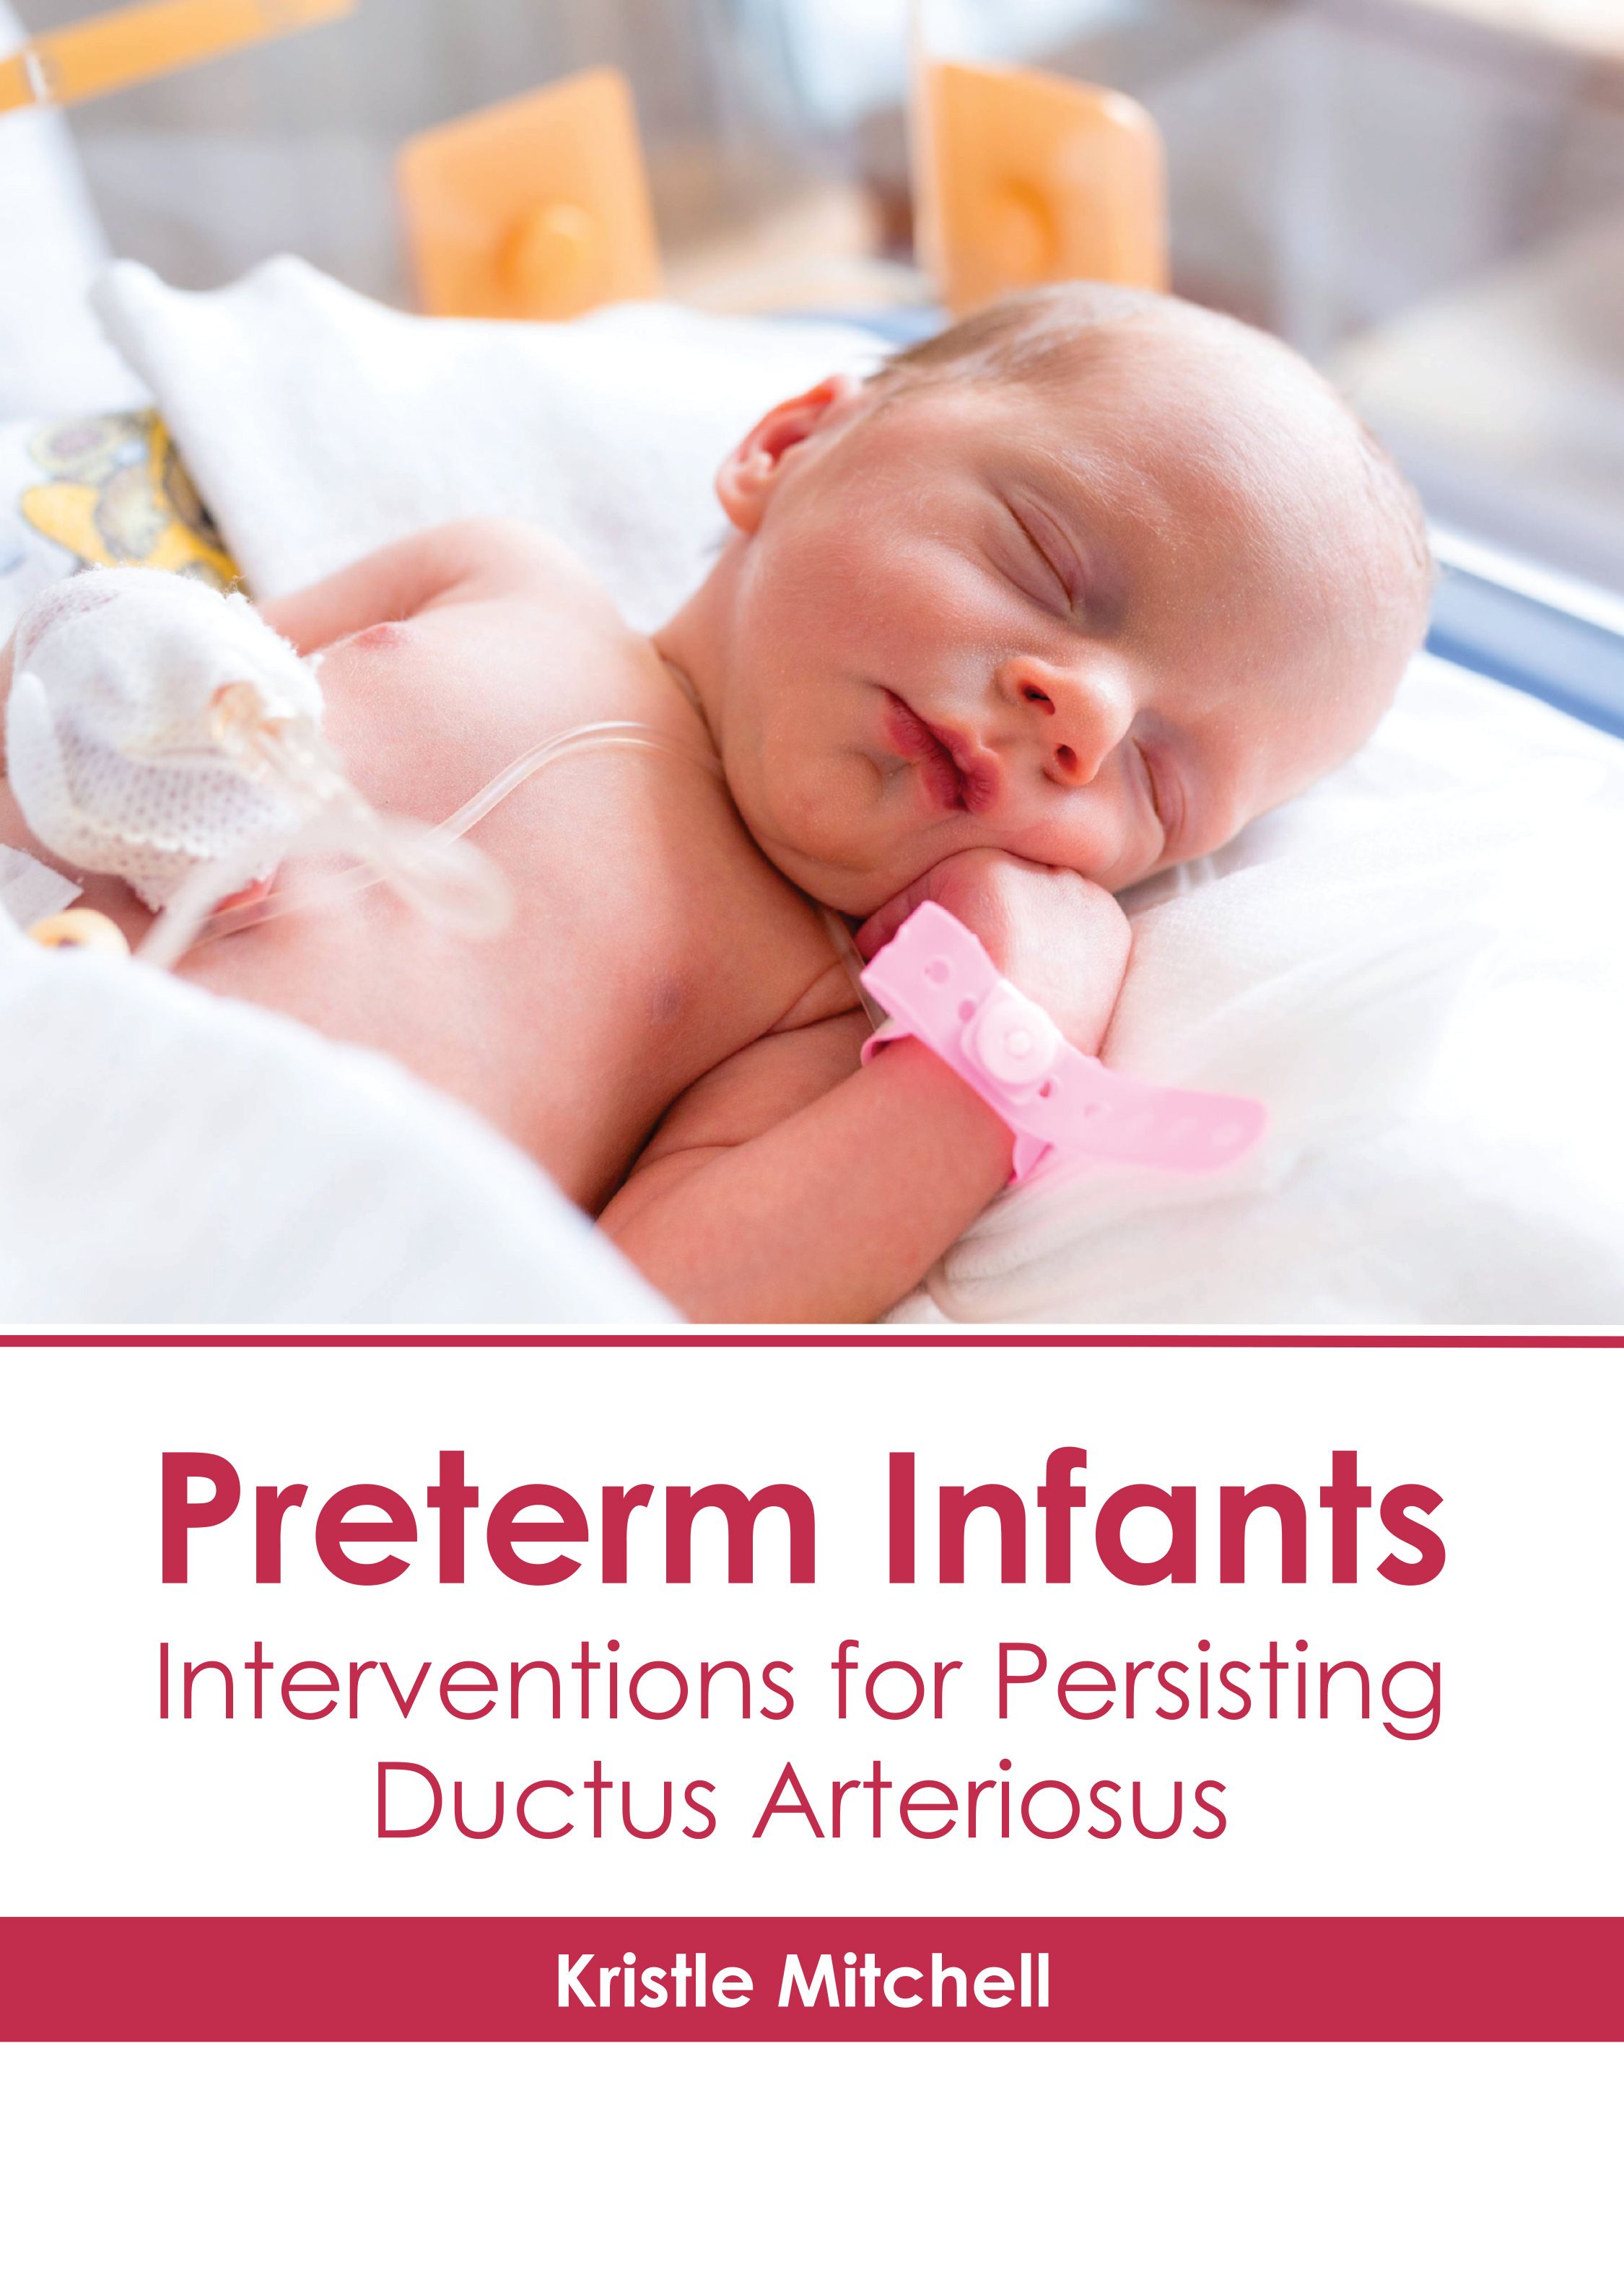 PRETERM INFANTS: INTERVENTIONS FOR PERSISTING DUCTUS ARTERIOSUS